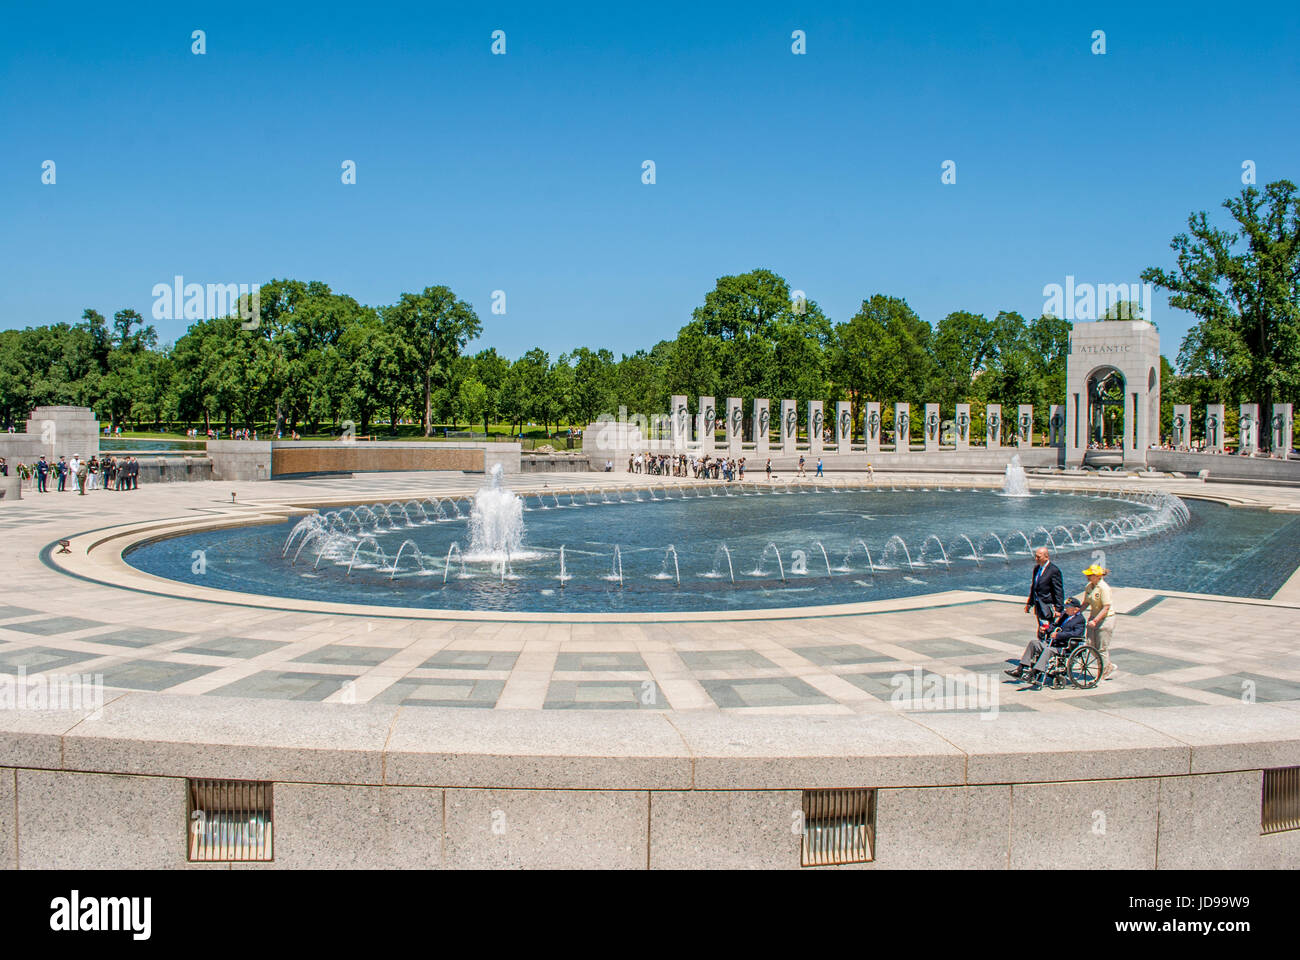 Veterano de la segunda guerra mundial en el Memorial de la Segunda Guerra Mundial en Washington D.C. Foto de stock